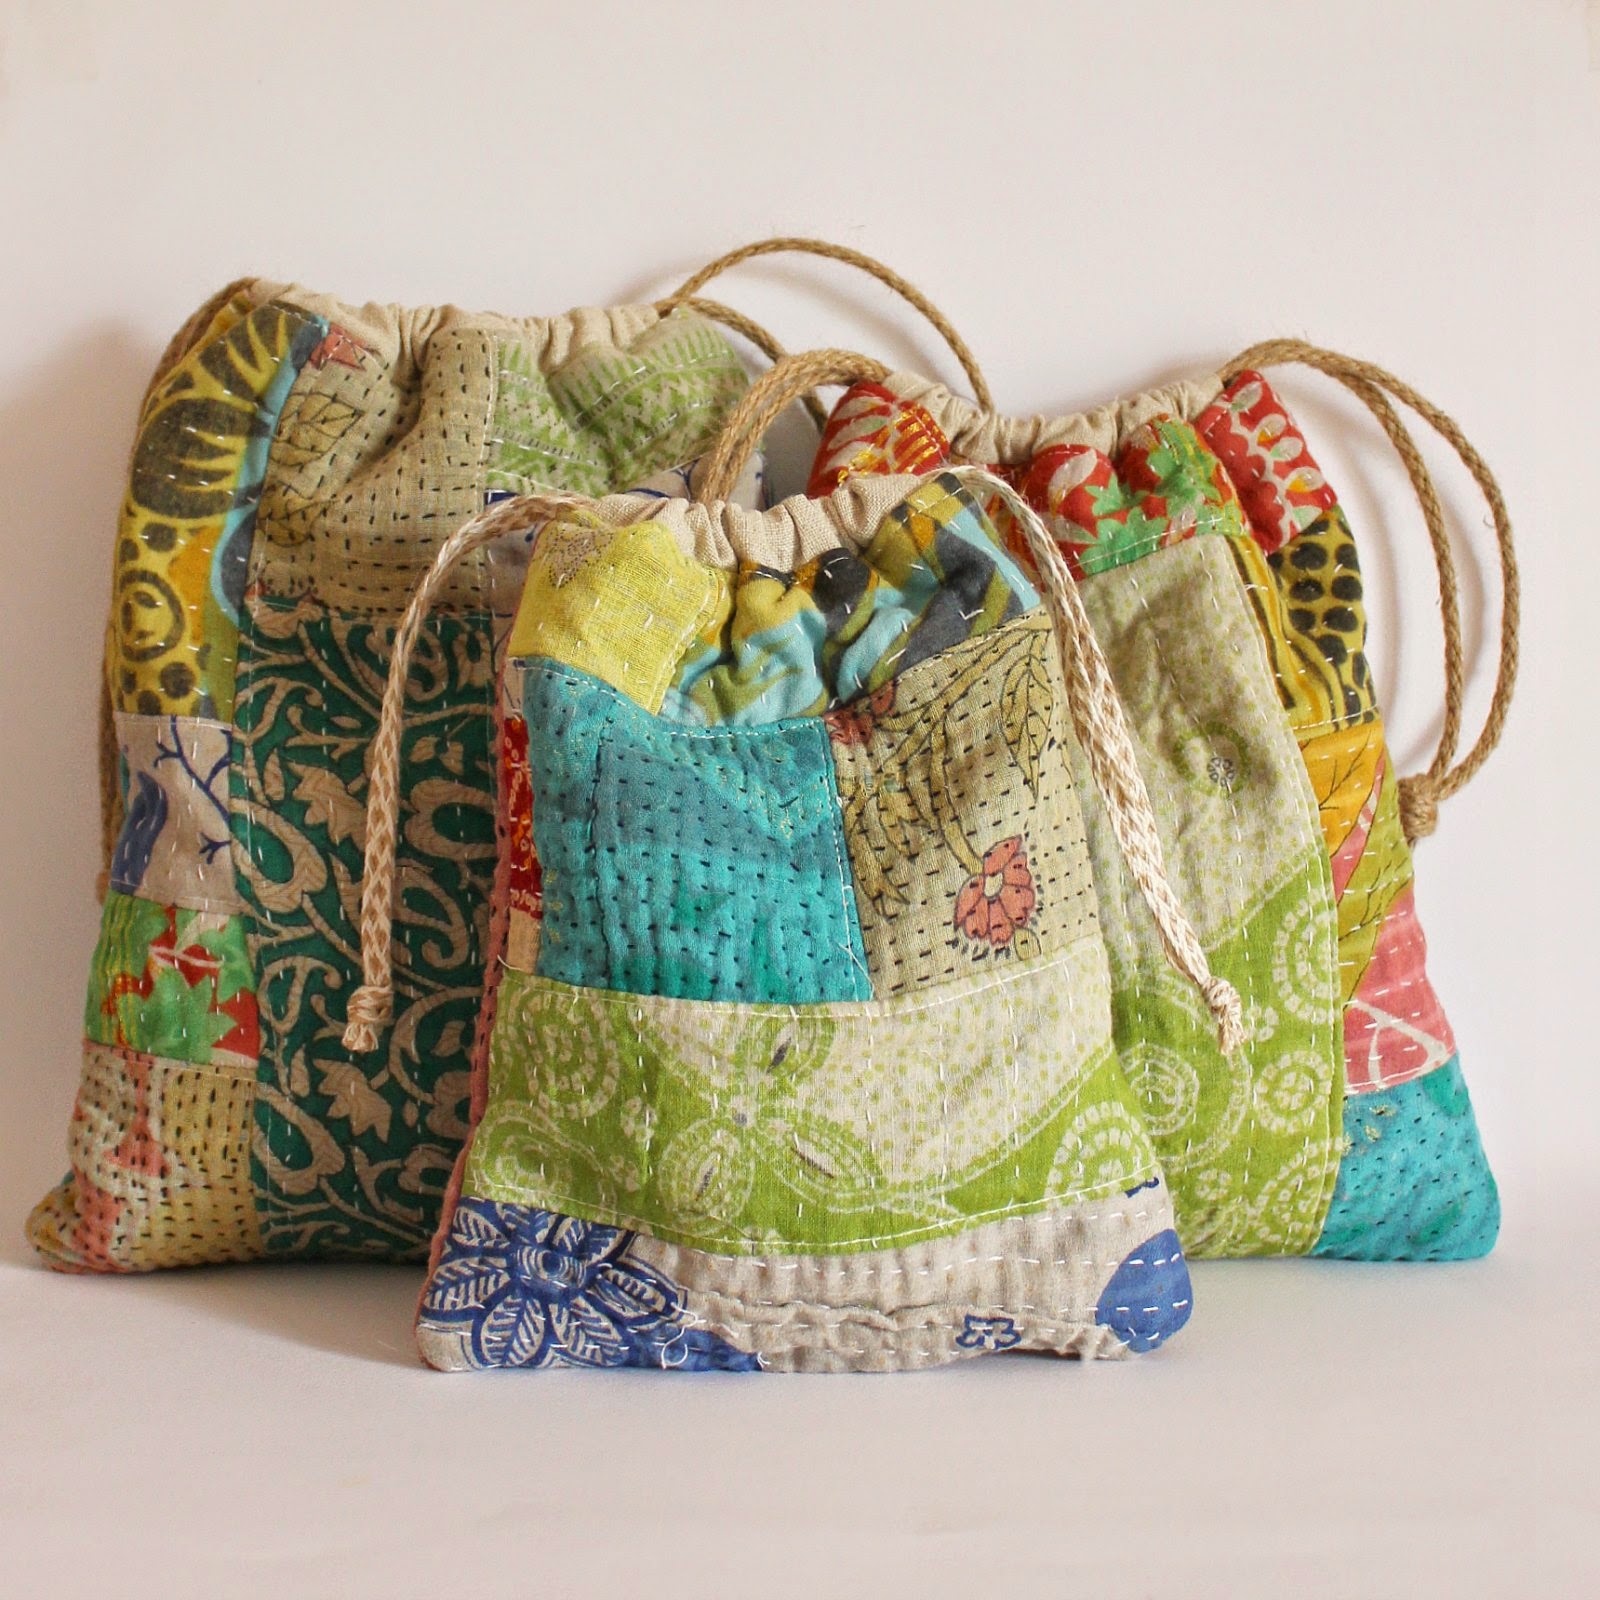 Roxy Creations: Kantha drawstring bags